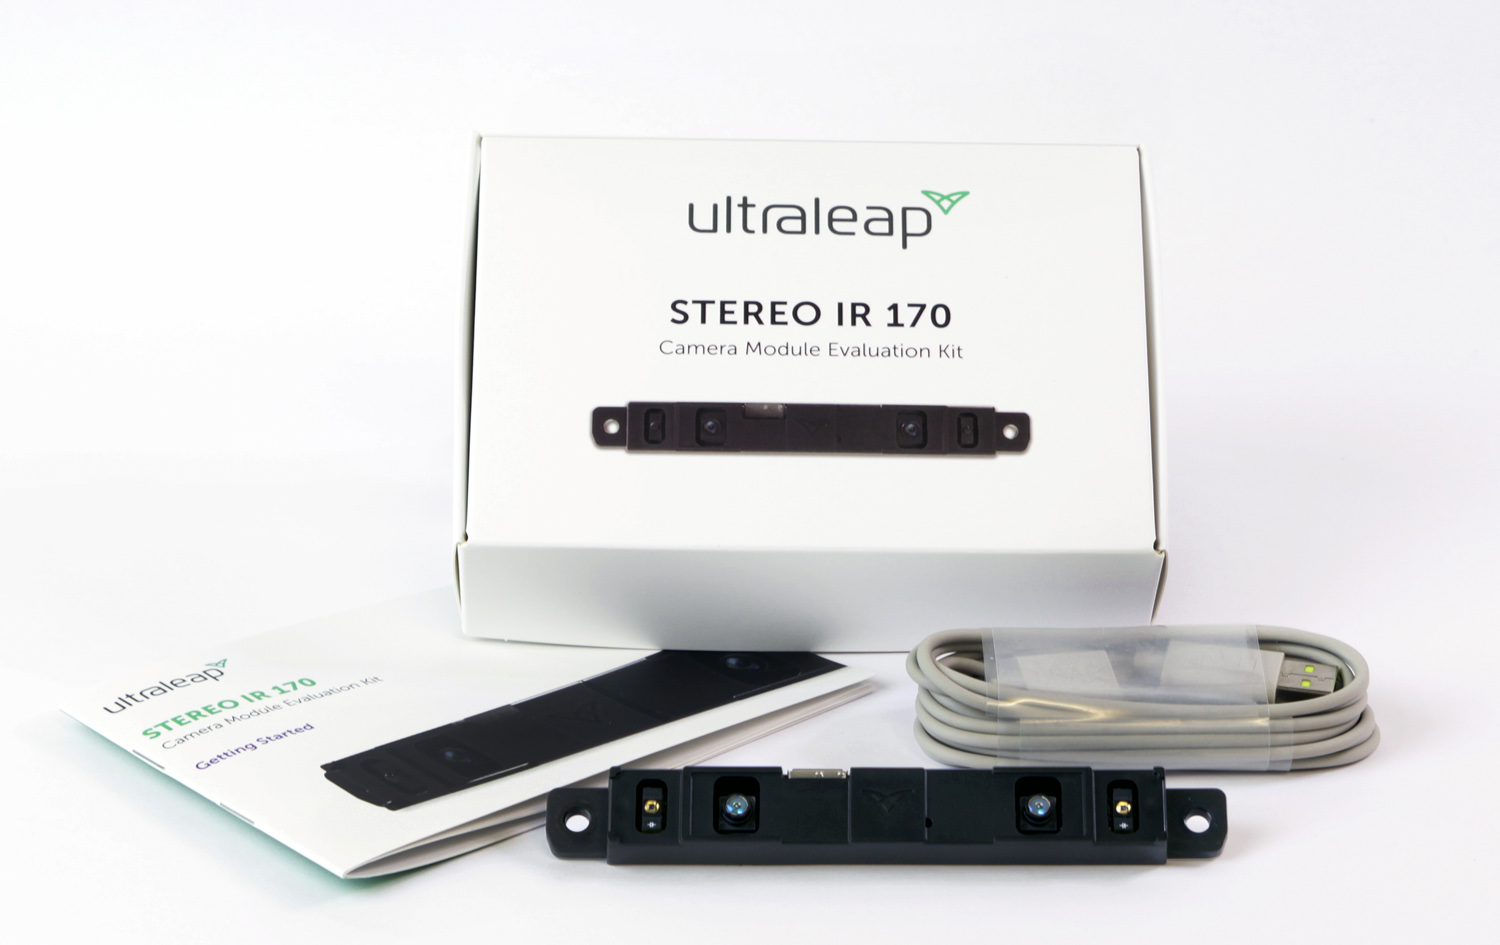 Ultraleap Stereo IR 170 Camera Module Evaluation Kit